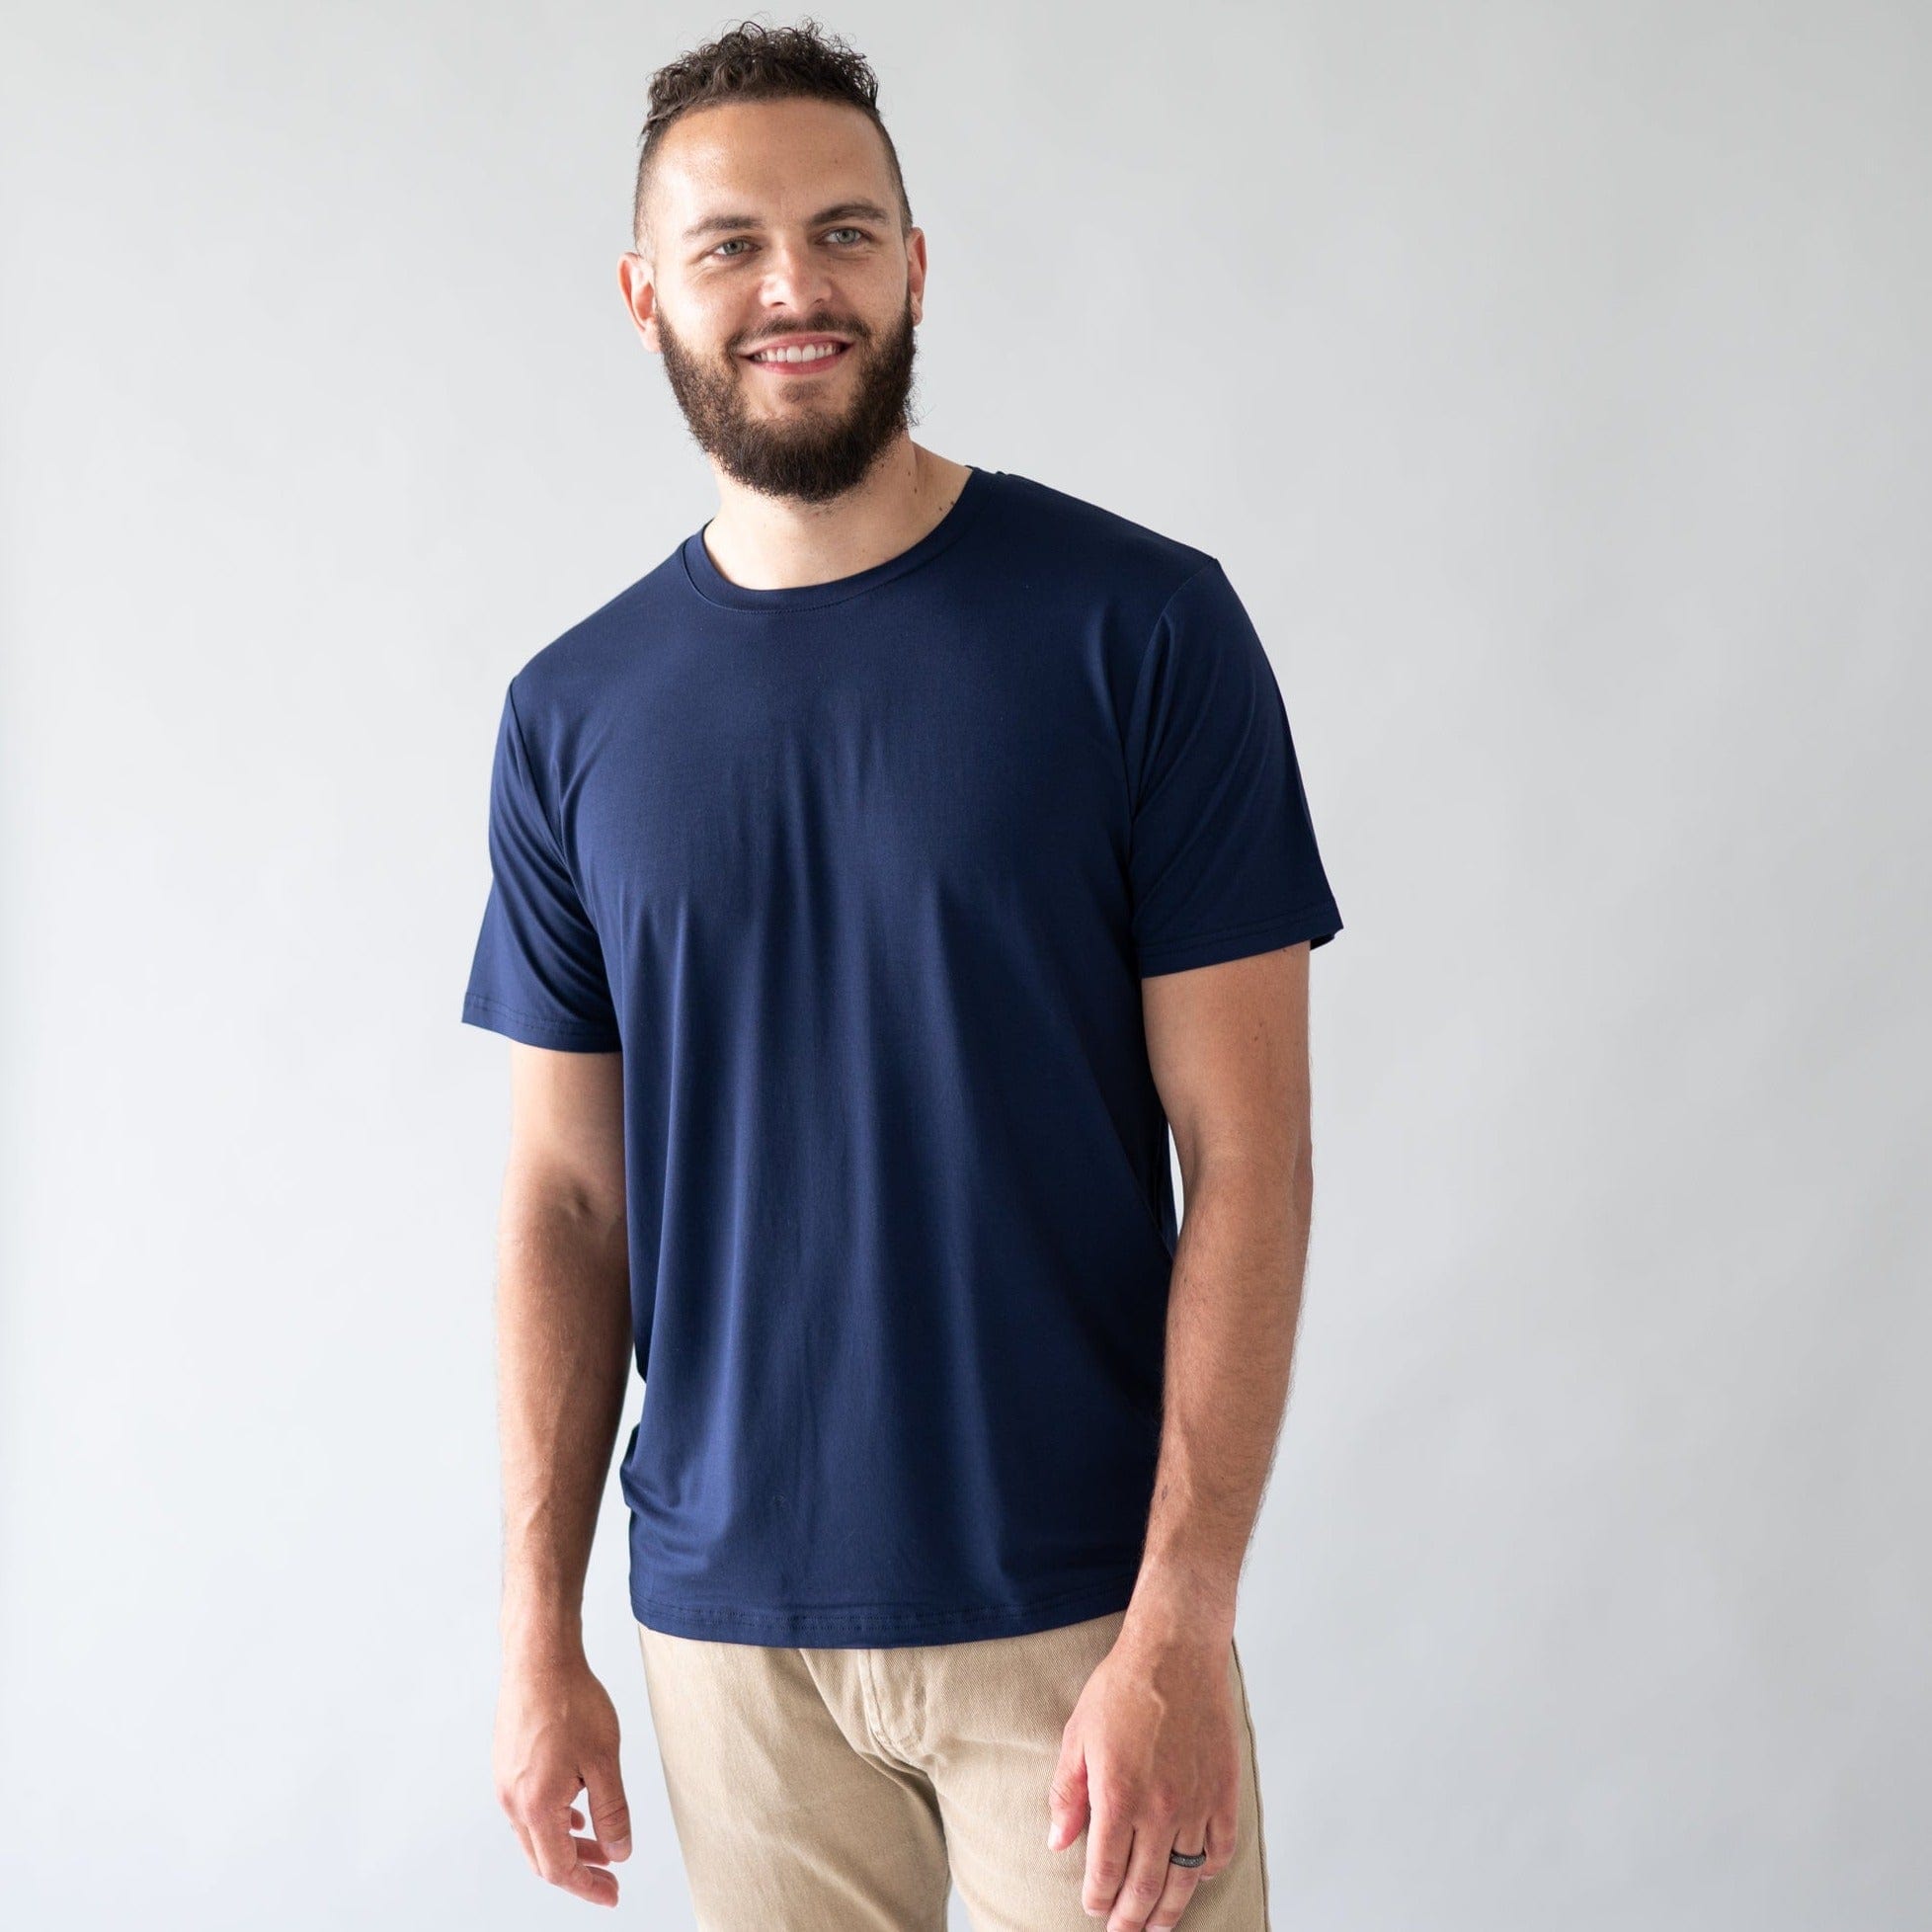 Men's Relaxed Fit Navy Blue V-Neck T-Shirt